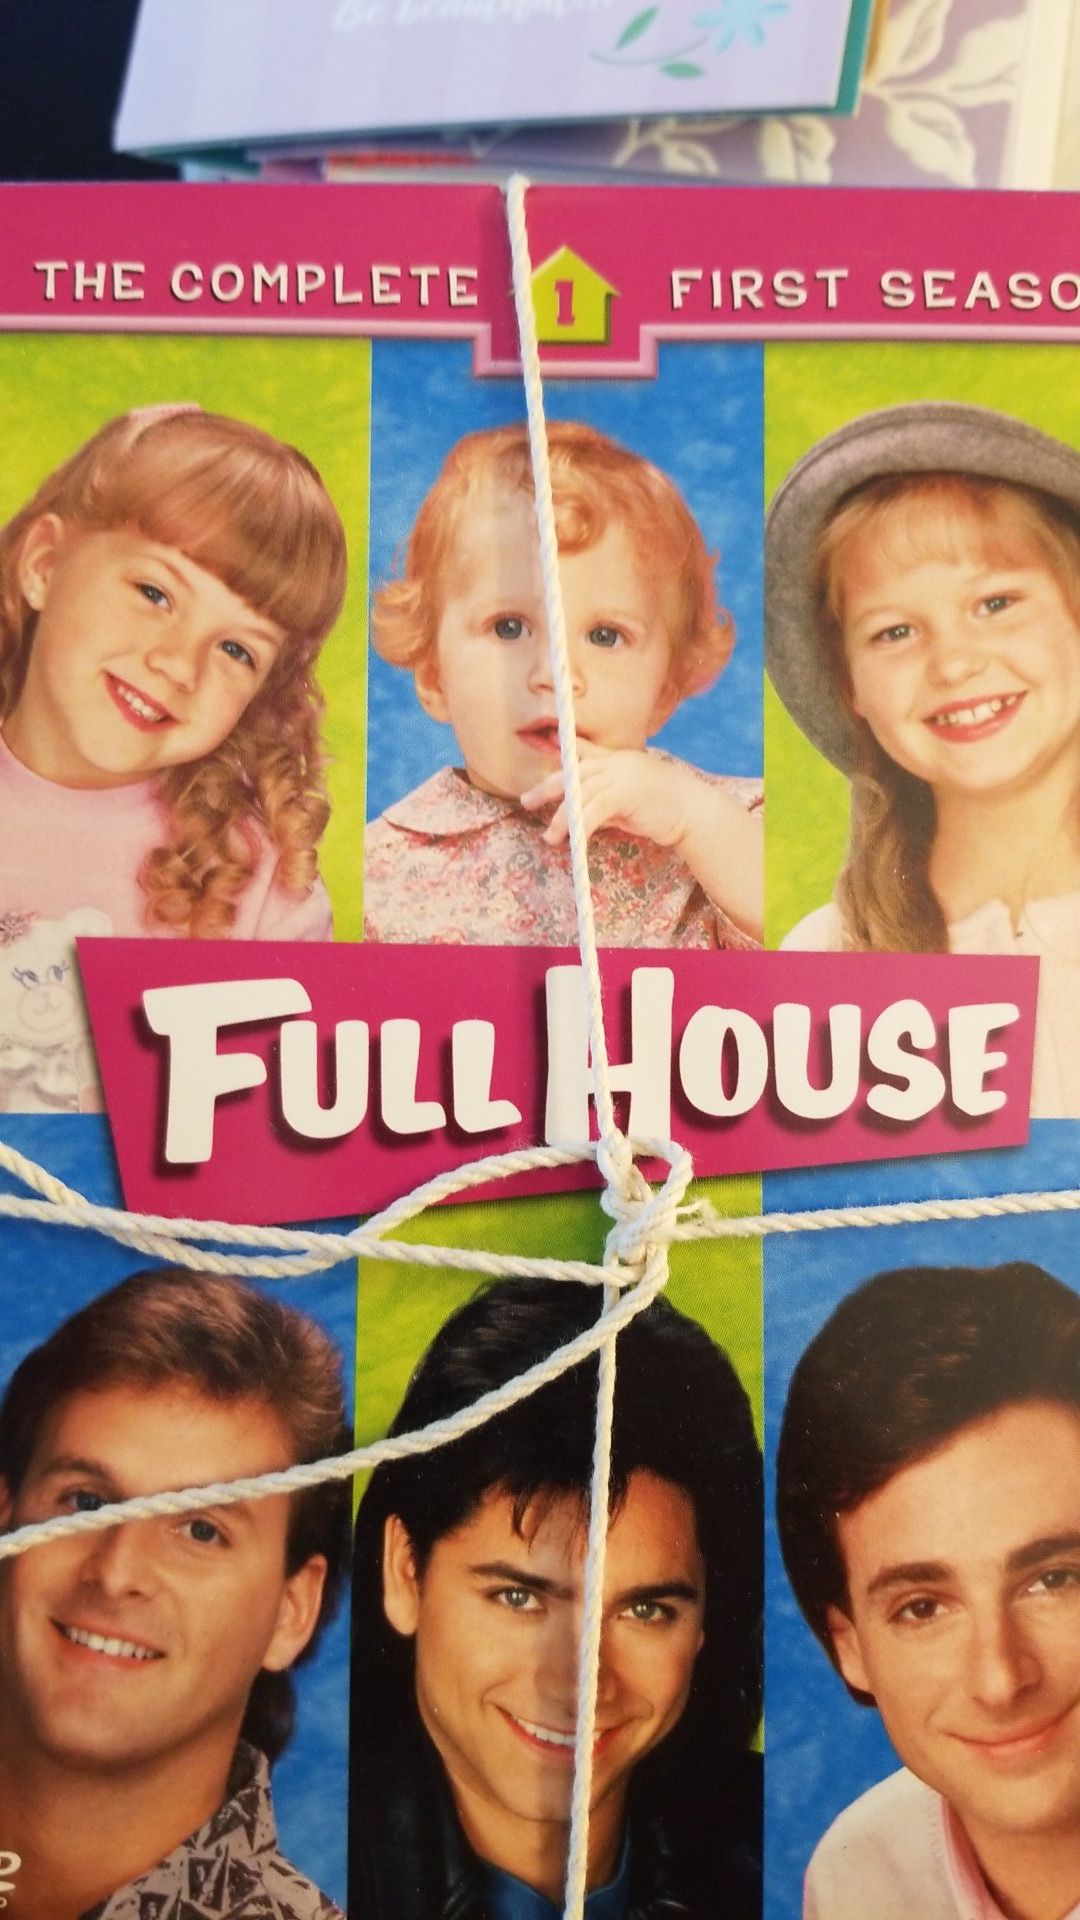 FULL HOUSE DVDS Seasons 1 to 8